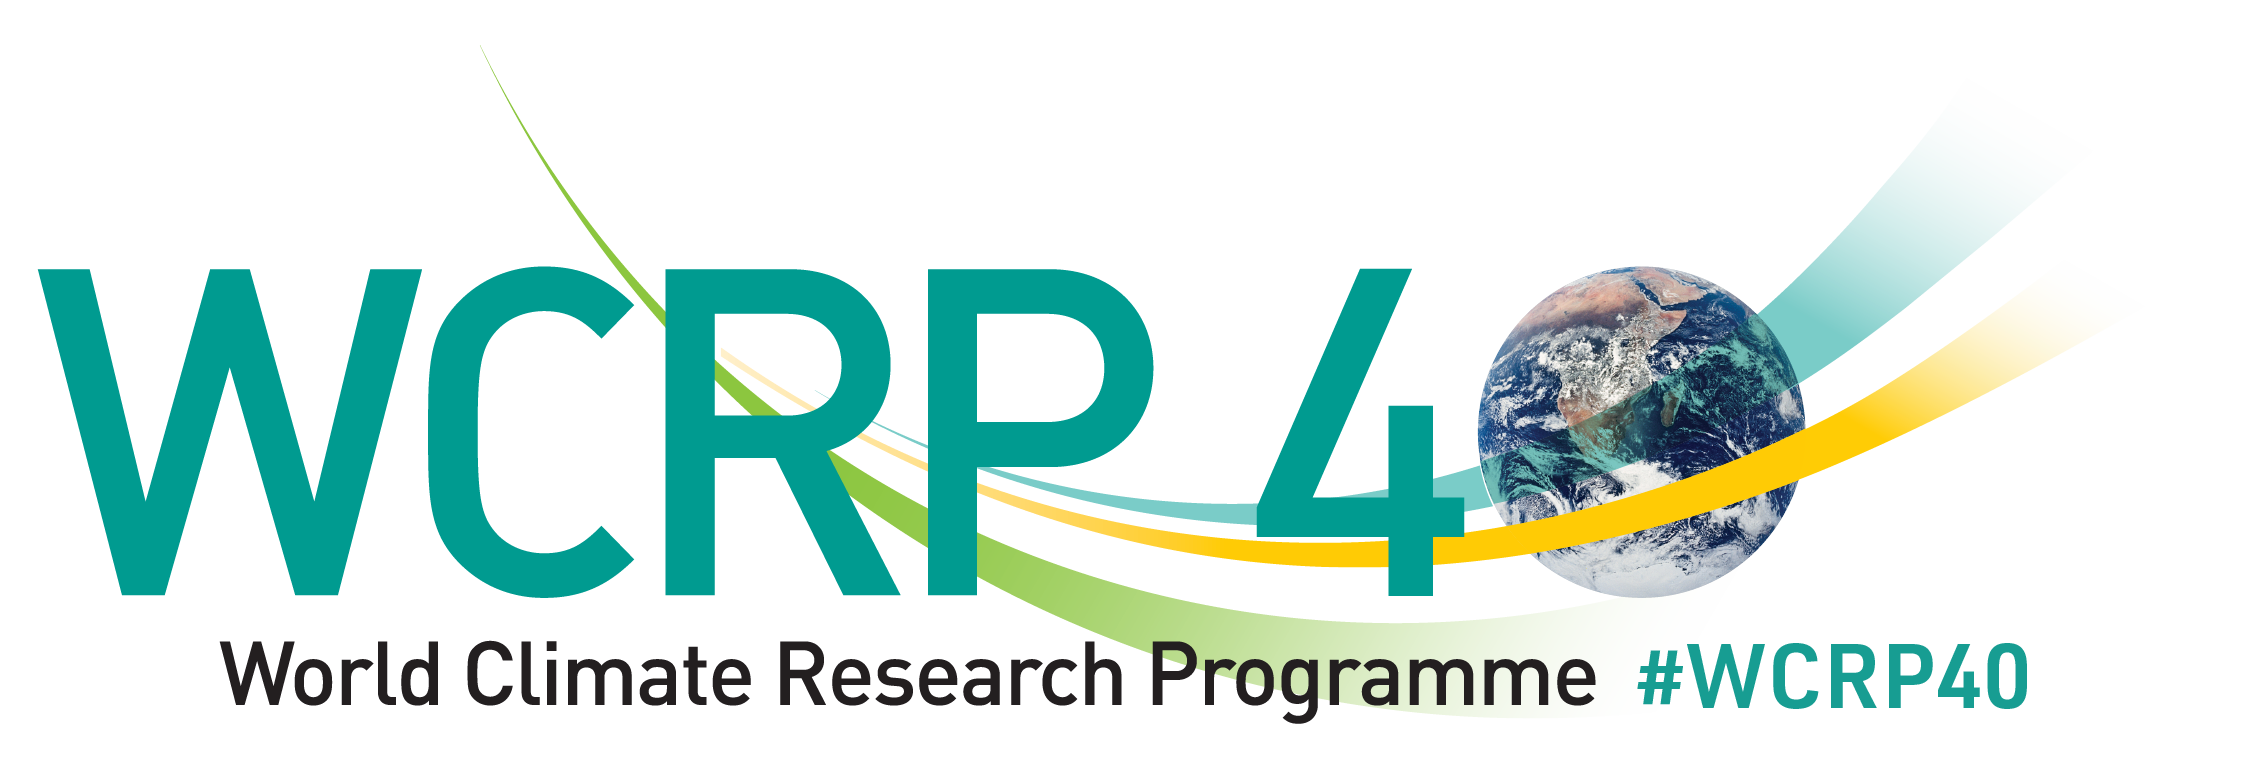 WCRP40 logo